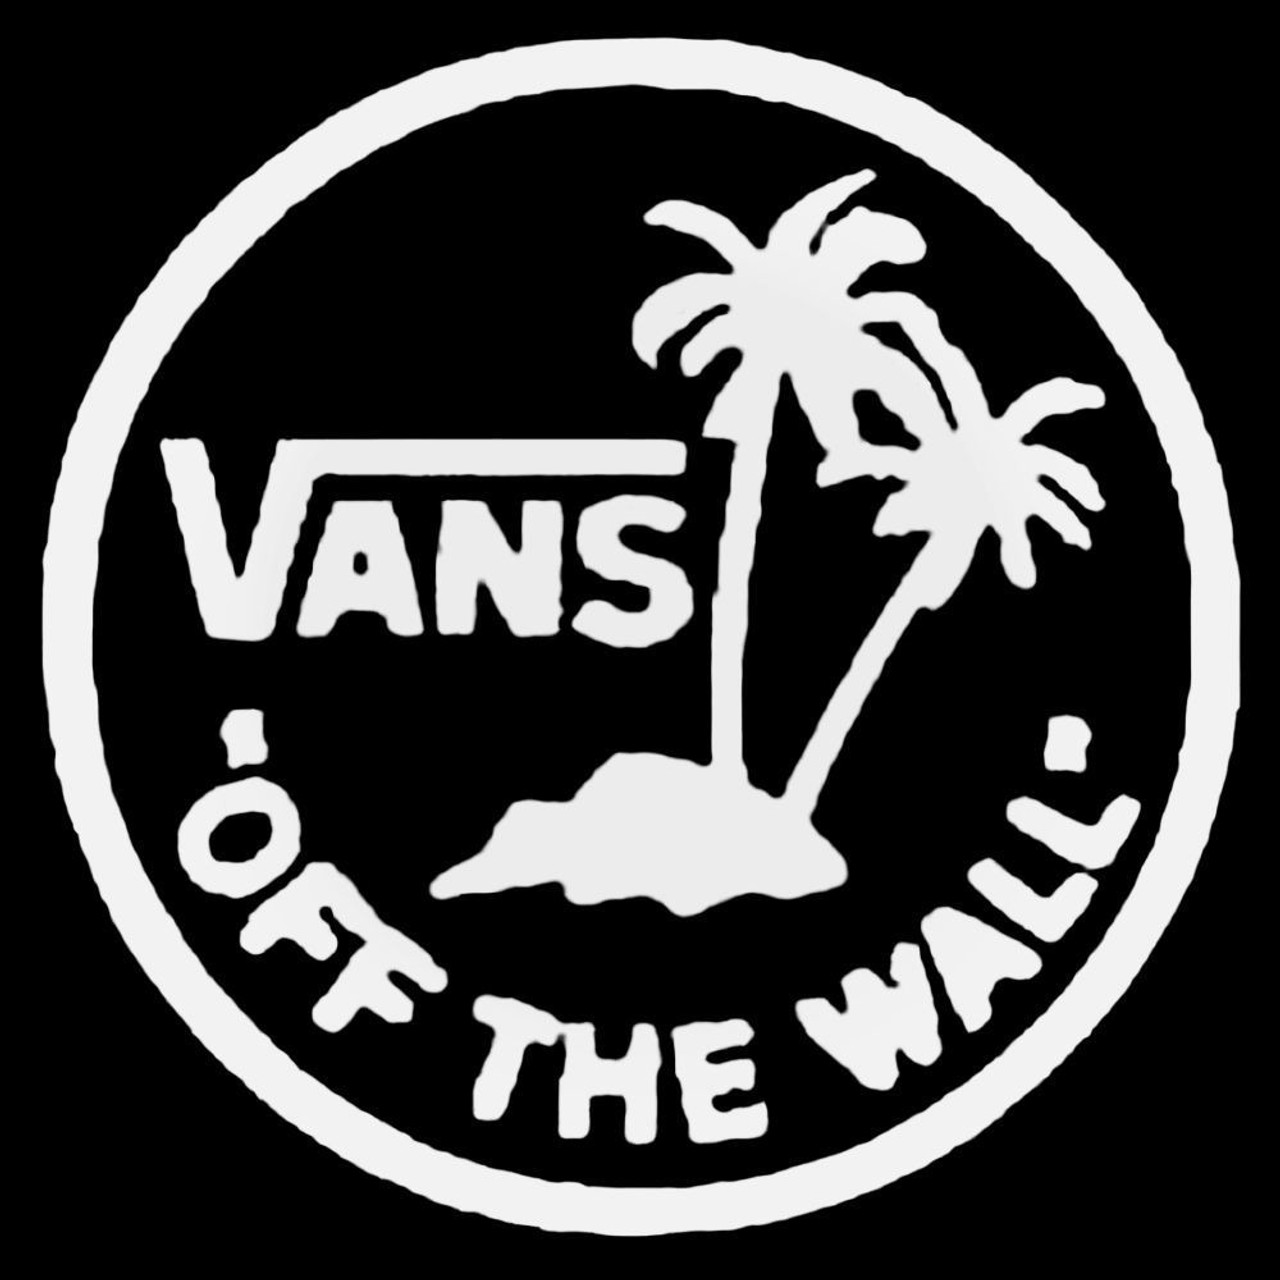 Vans The Wall Broloha Logo